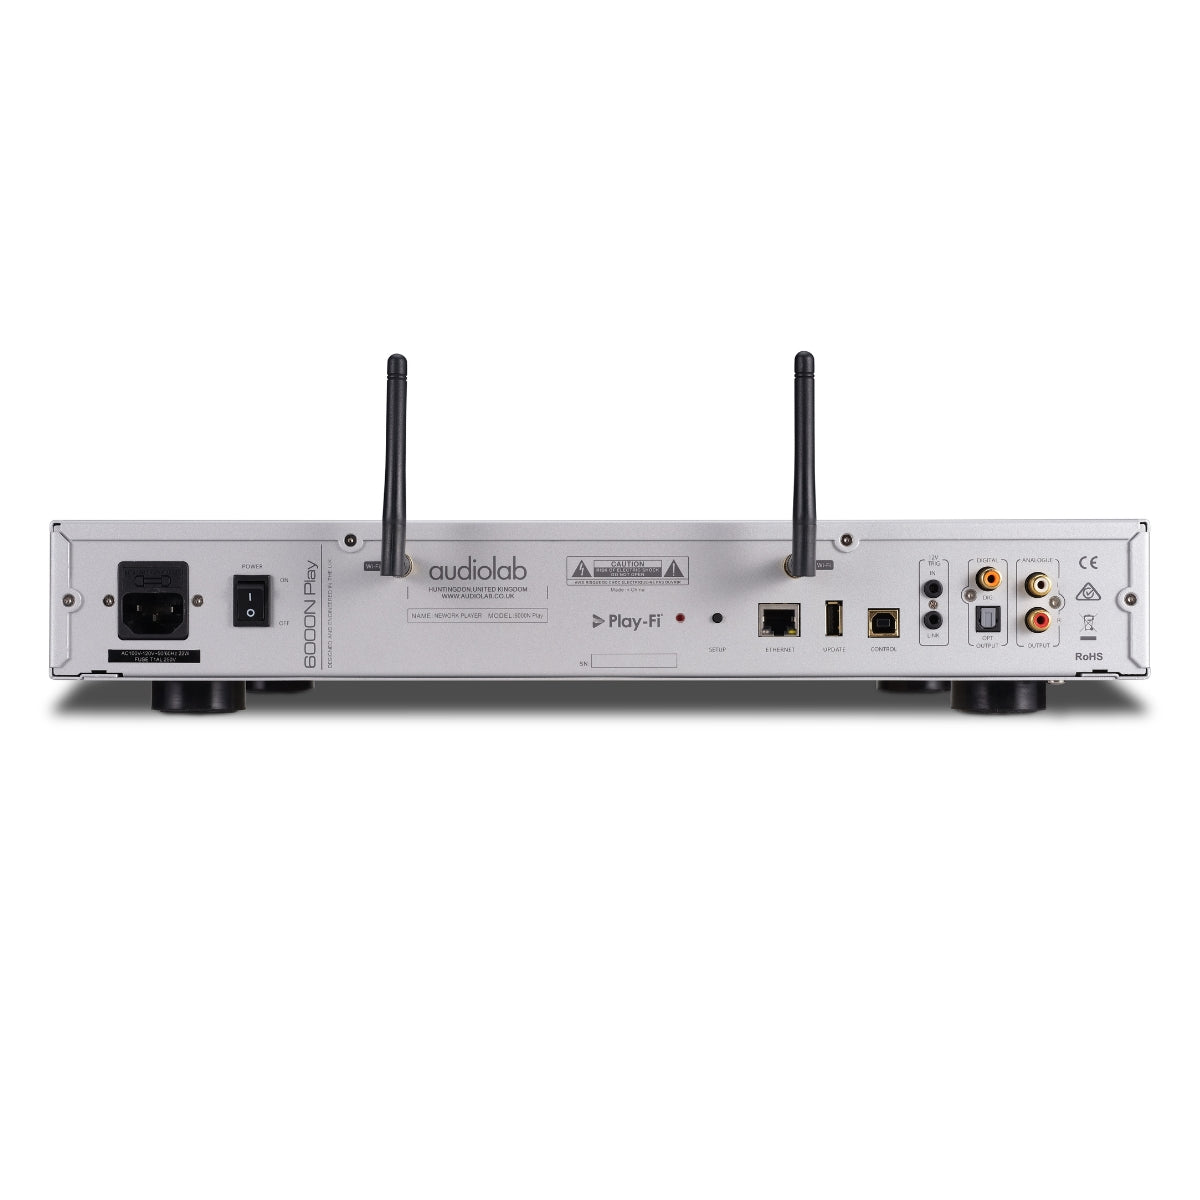 Audiolab 6000N Play Network Streamer